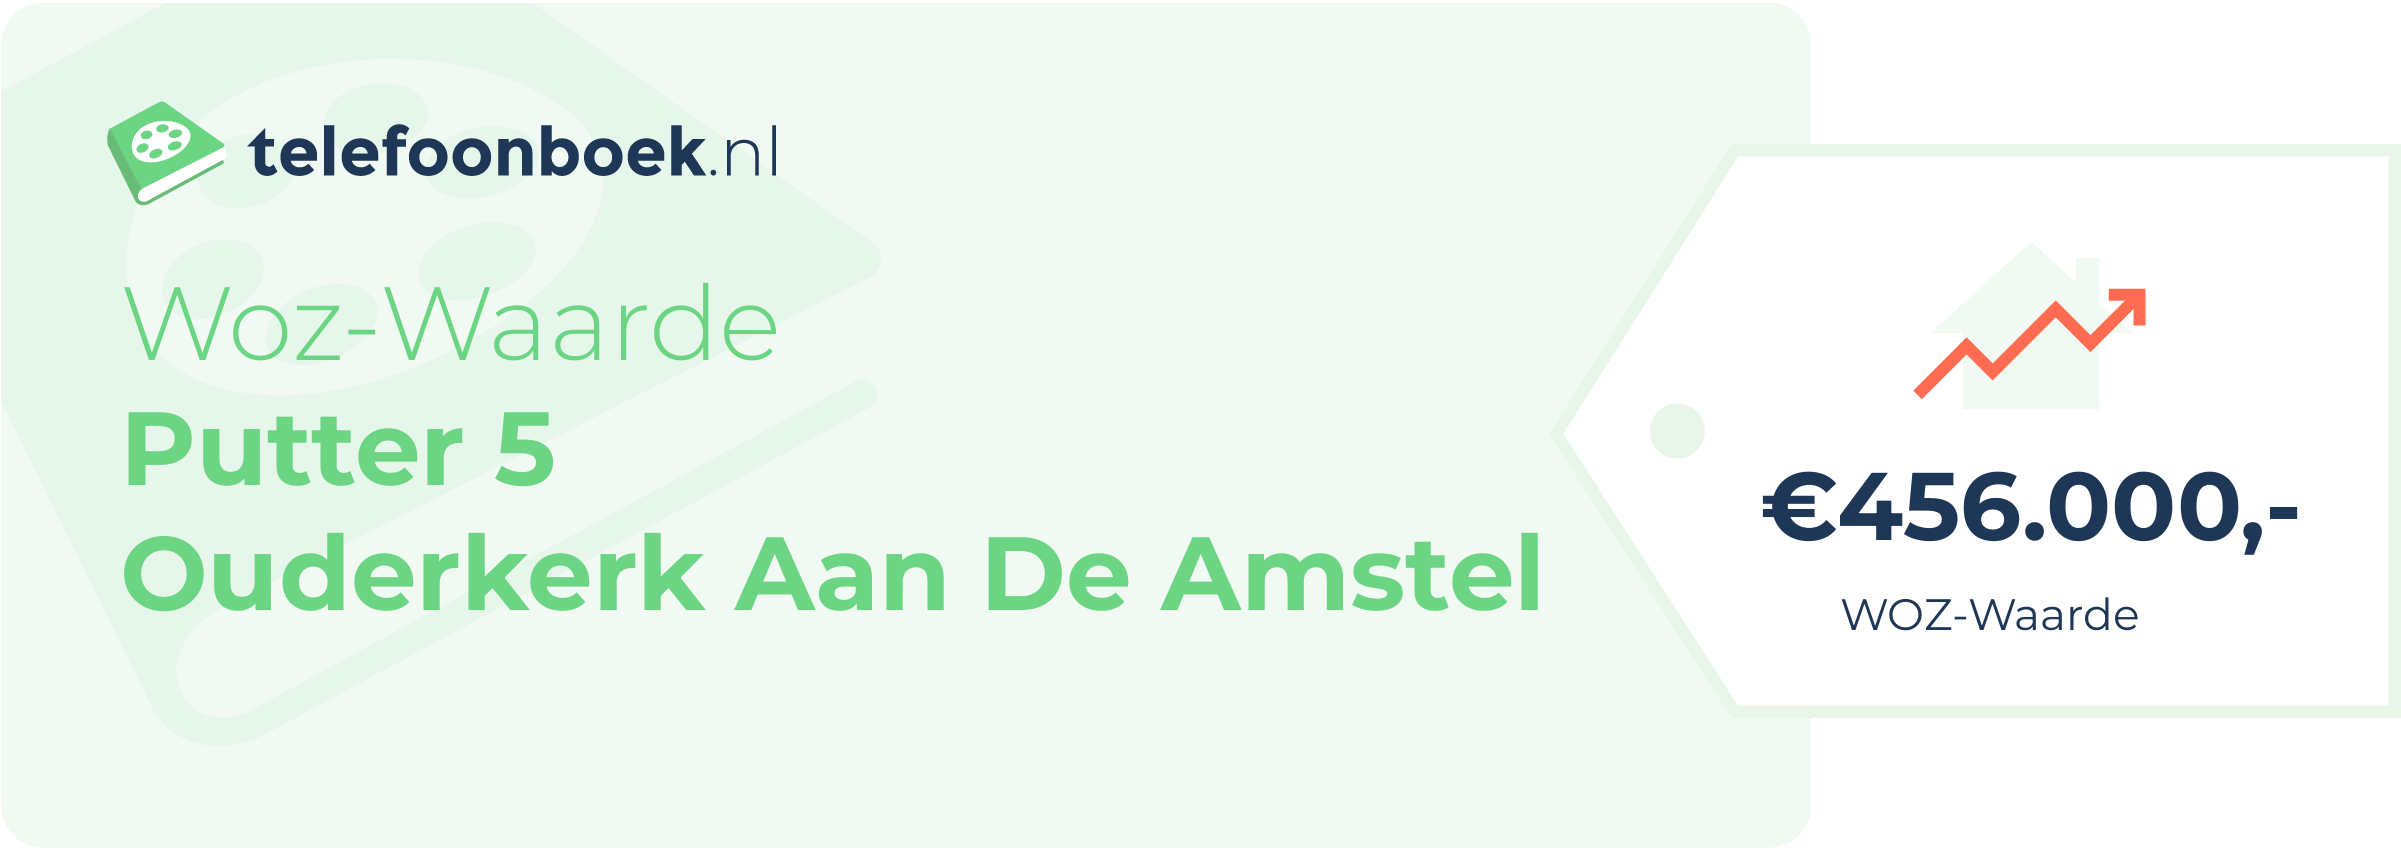 WOZ-waarde Putter 5 Ouderkerk Aan De Amstel